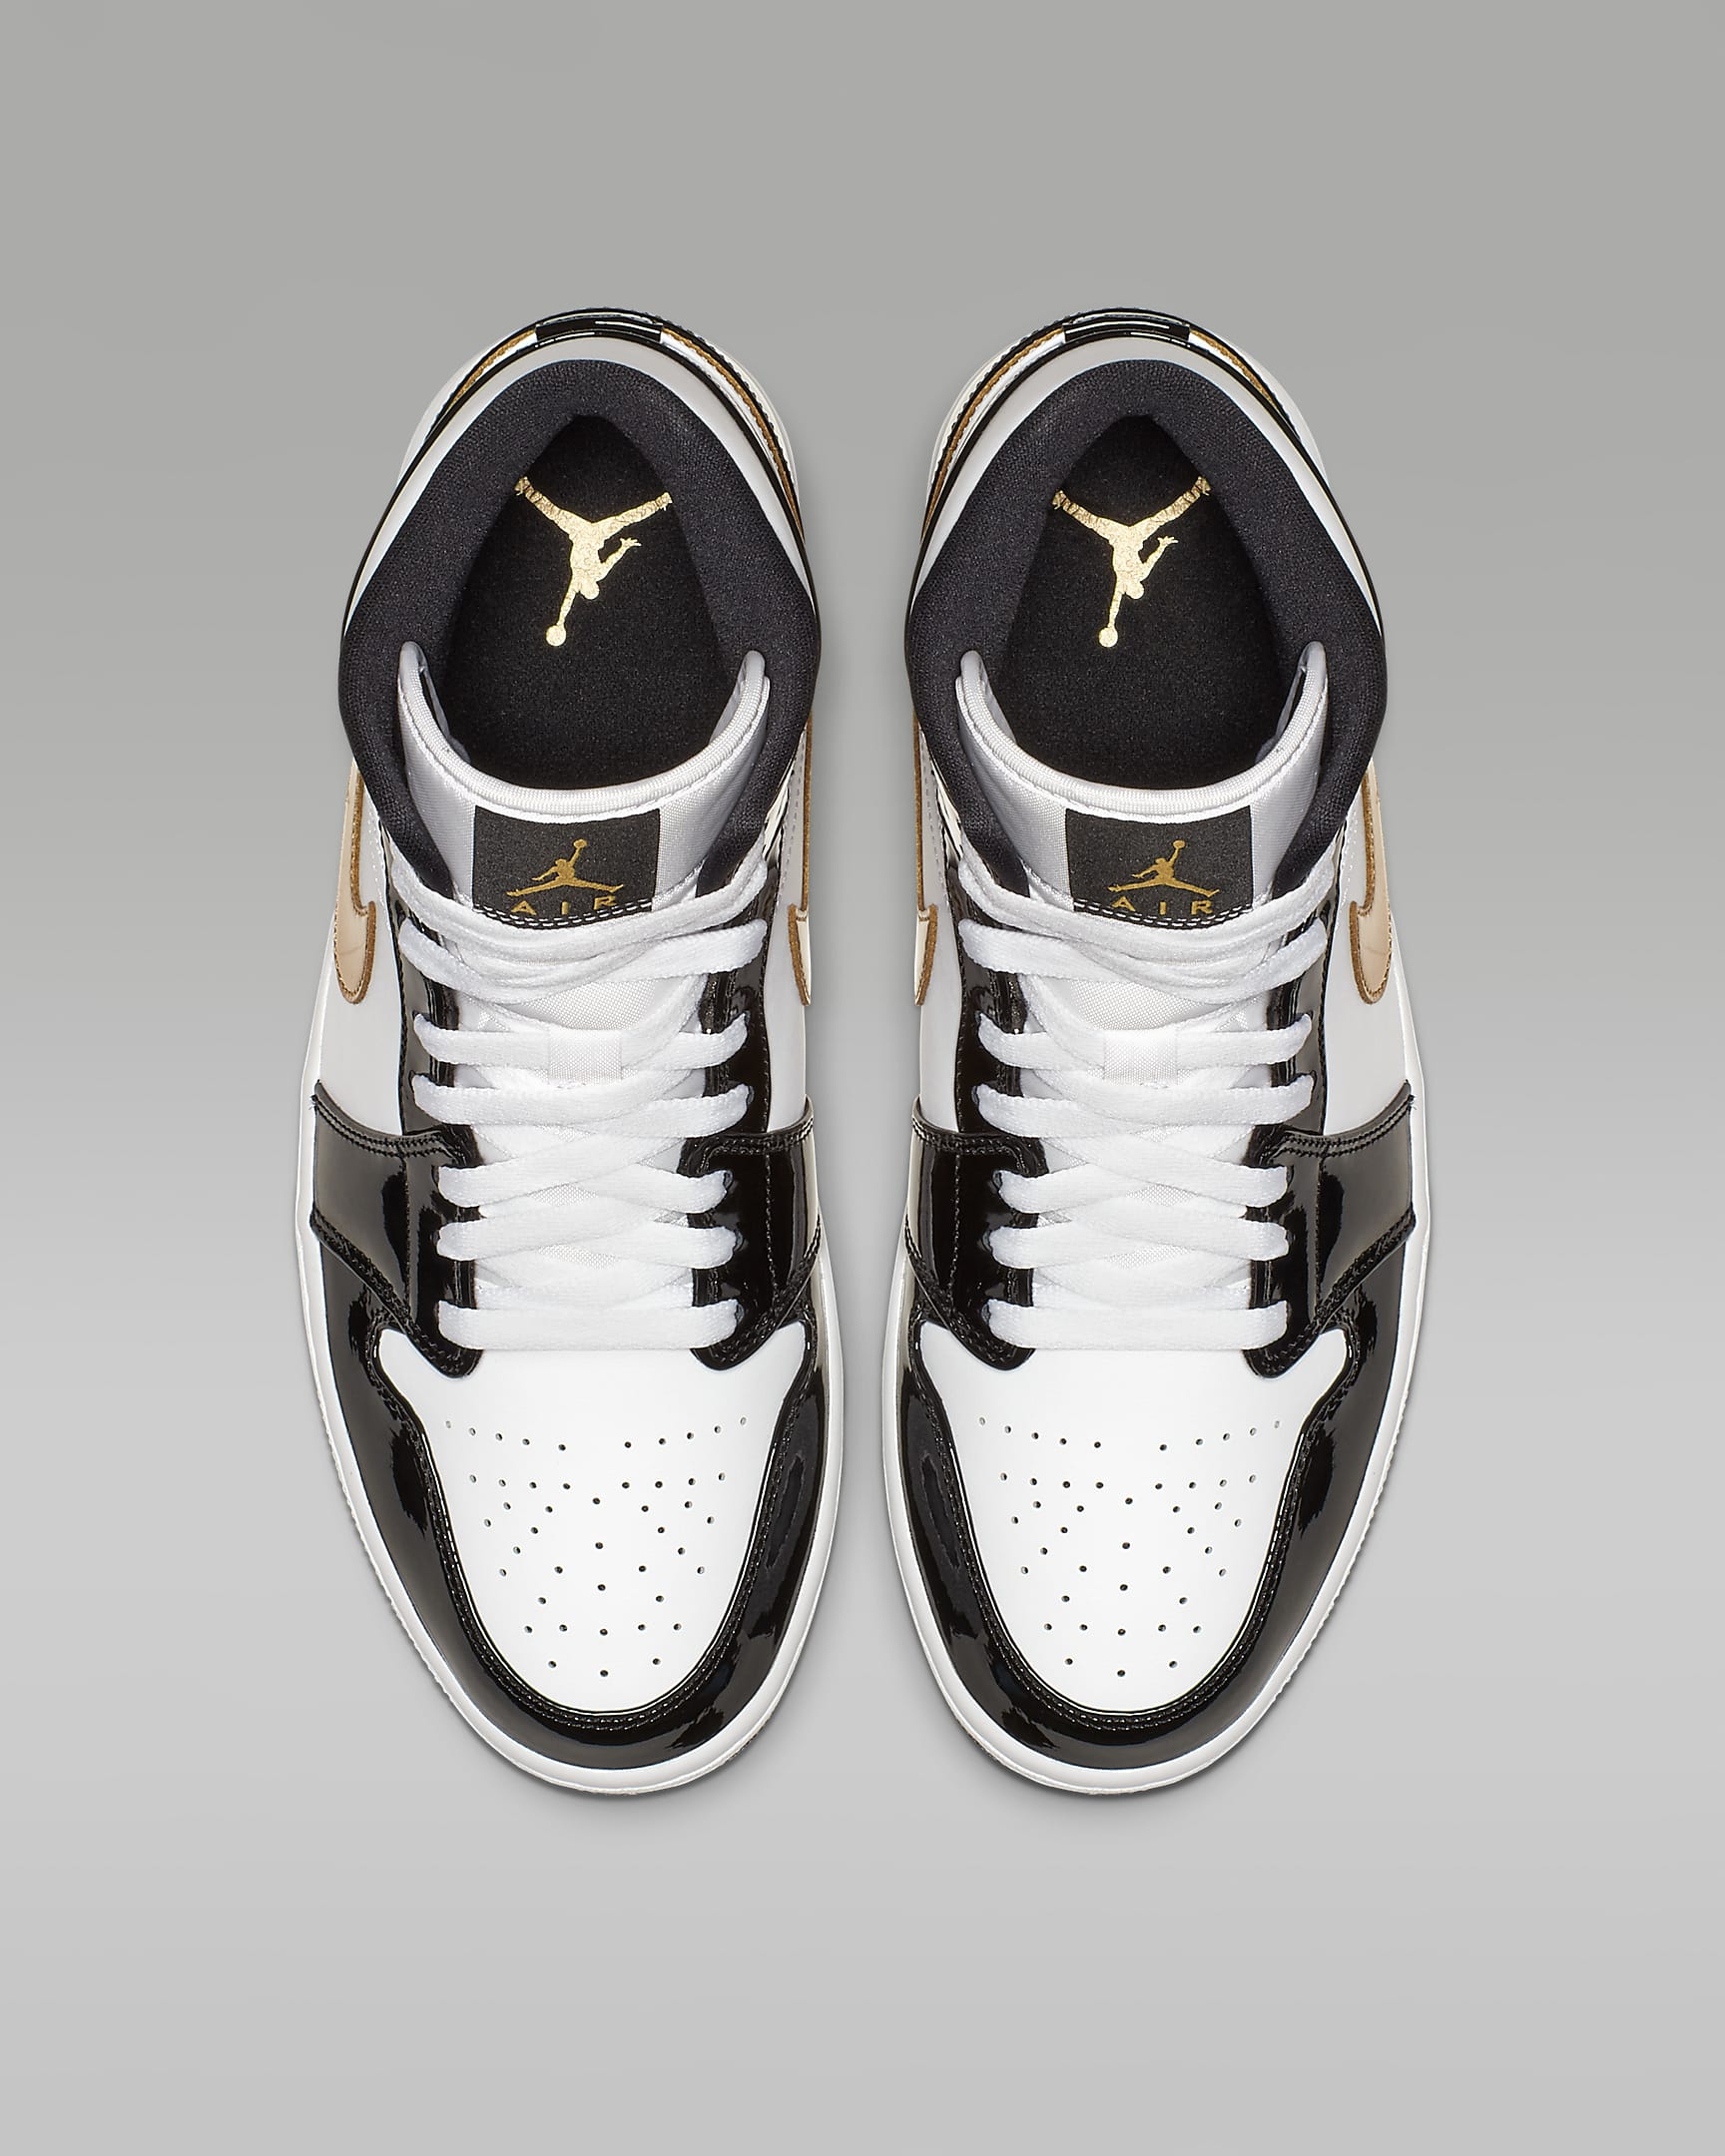 Air Jordan 1 Mid SE Men’s Shoes Review: The Sneakerheads’ Dream or Nightmare?